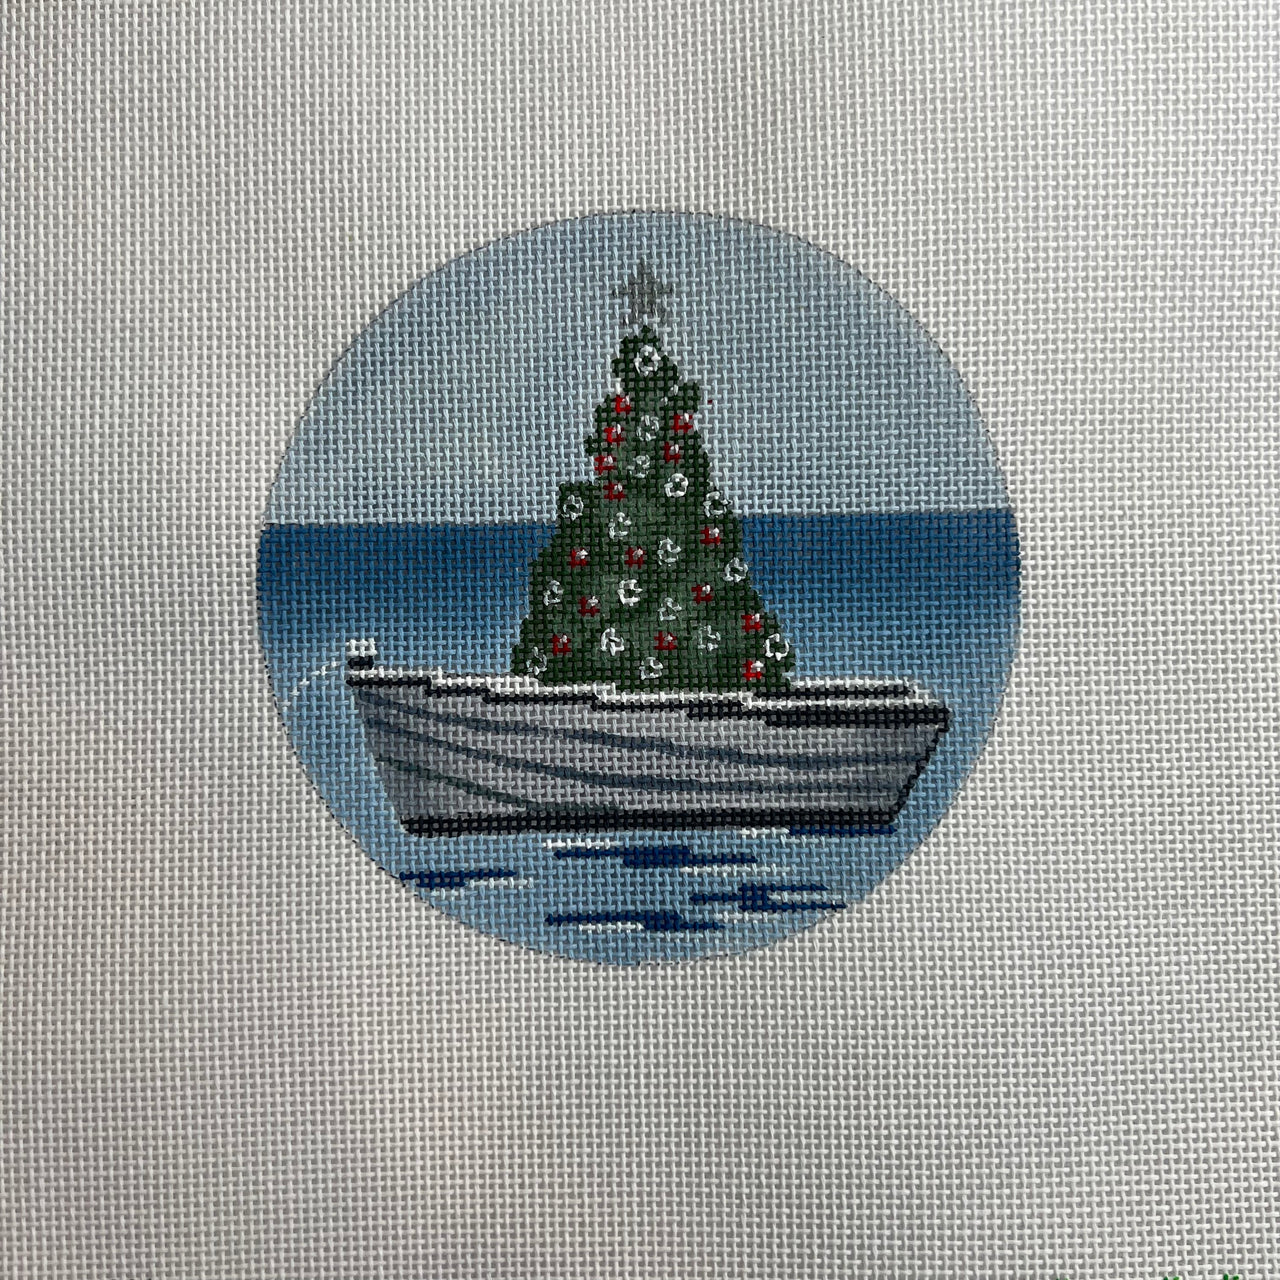 SB1014 Nantucket Boat with Tree